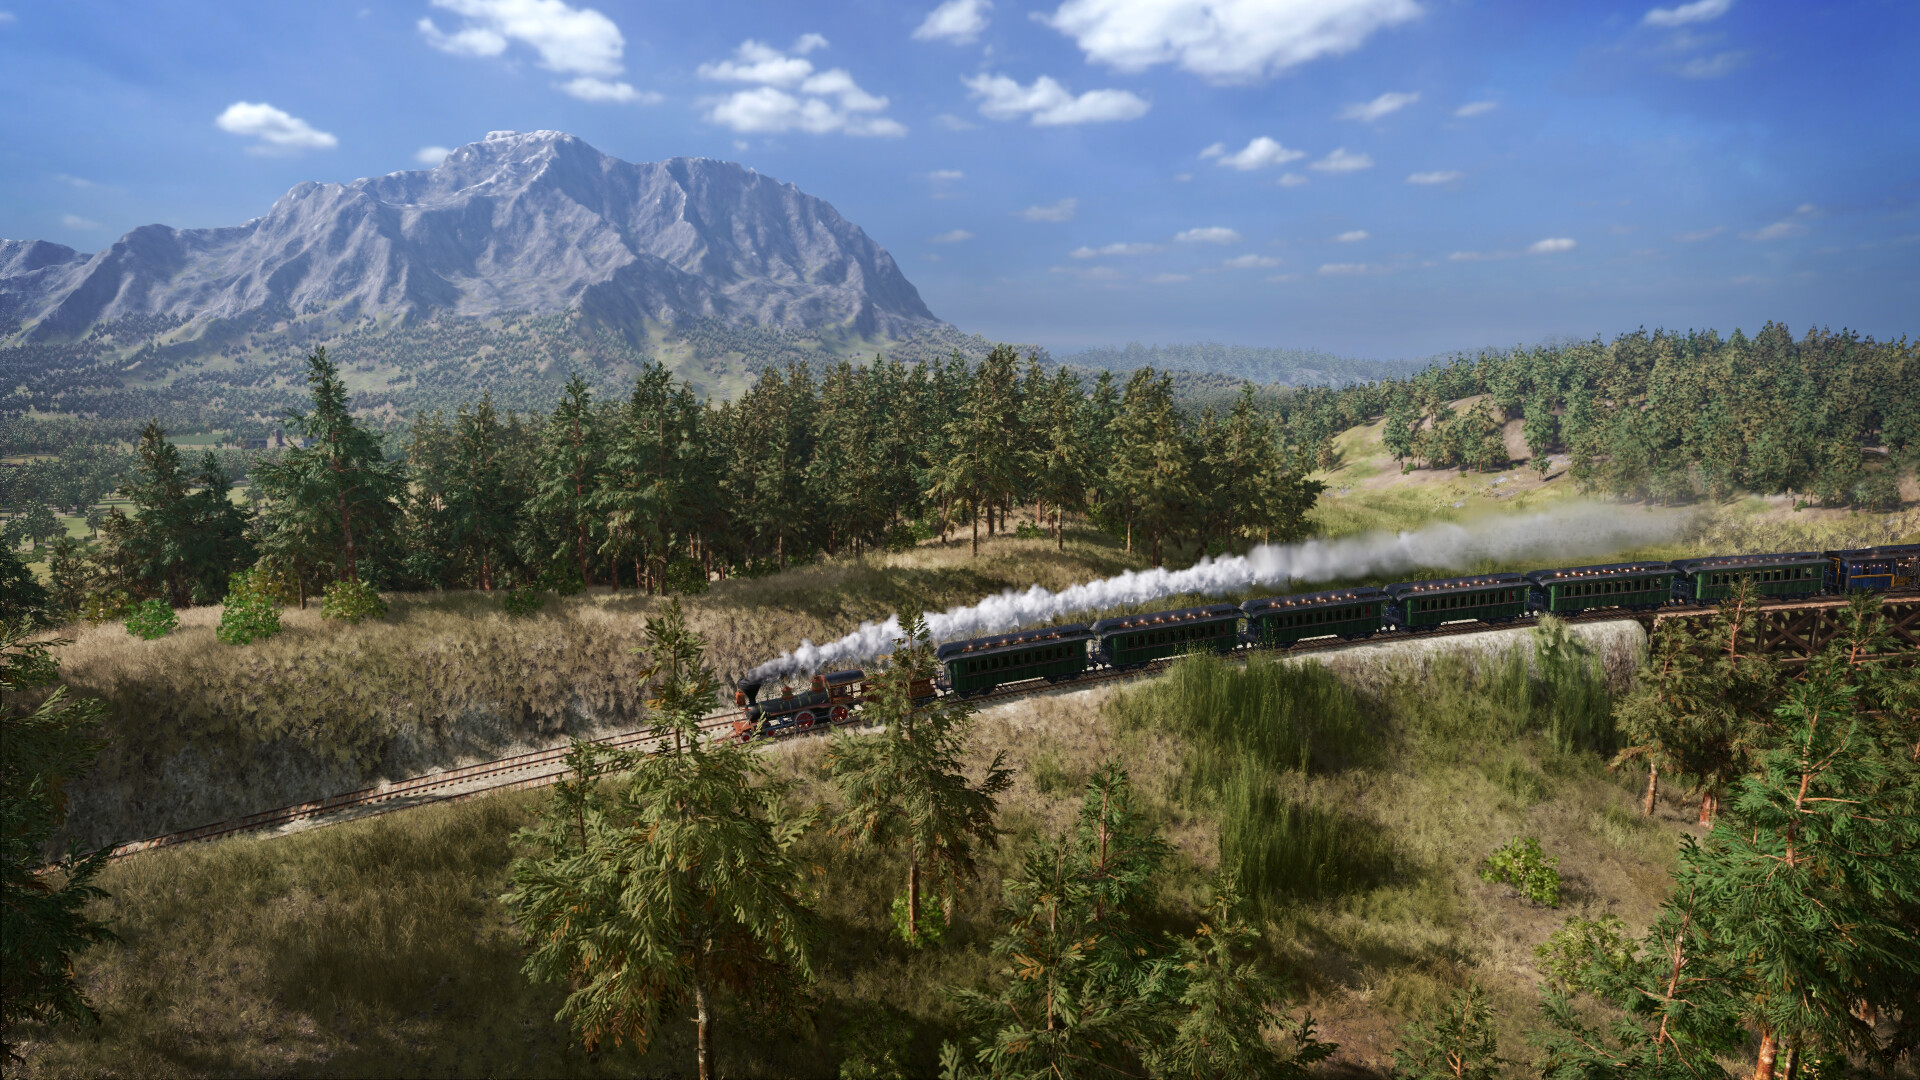 Railway Empire 2 Deluxe Edition Steam Altergift